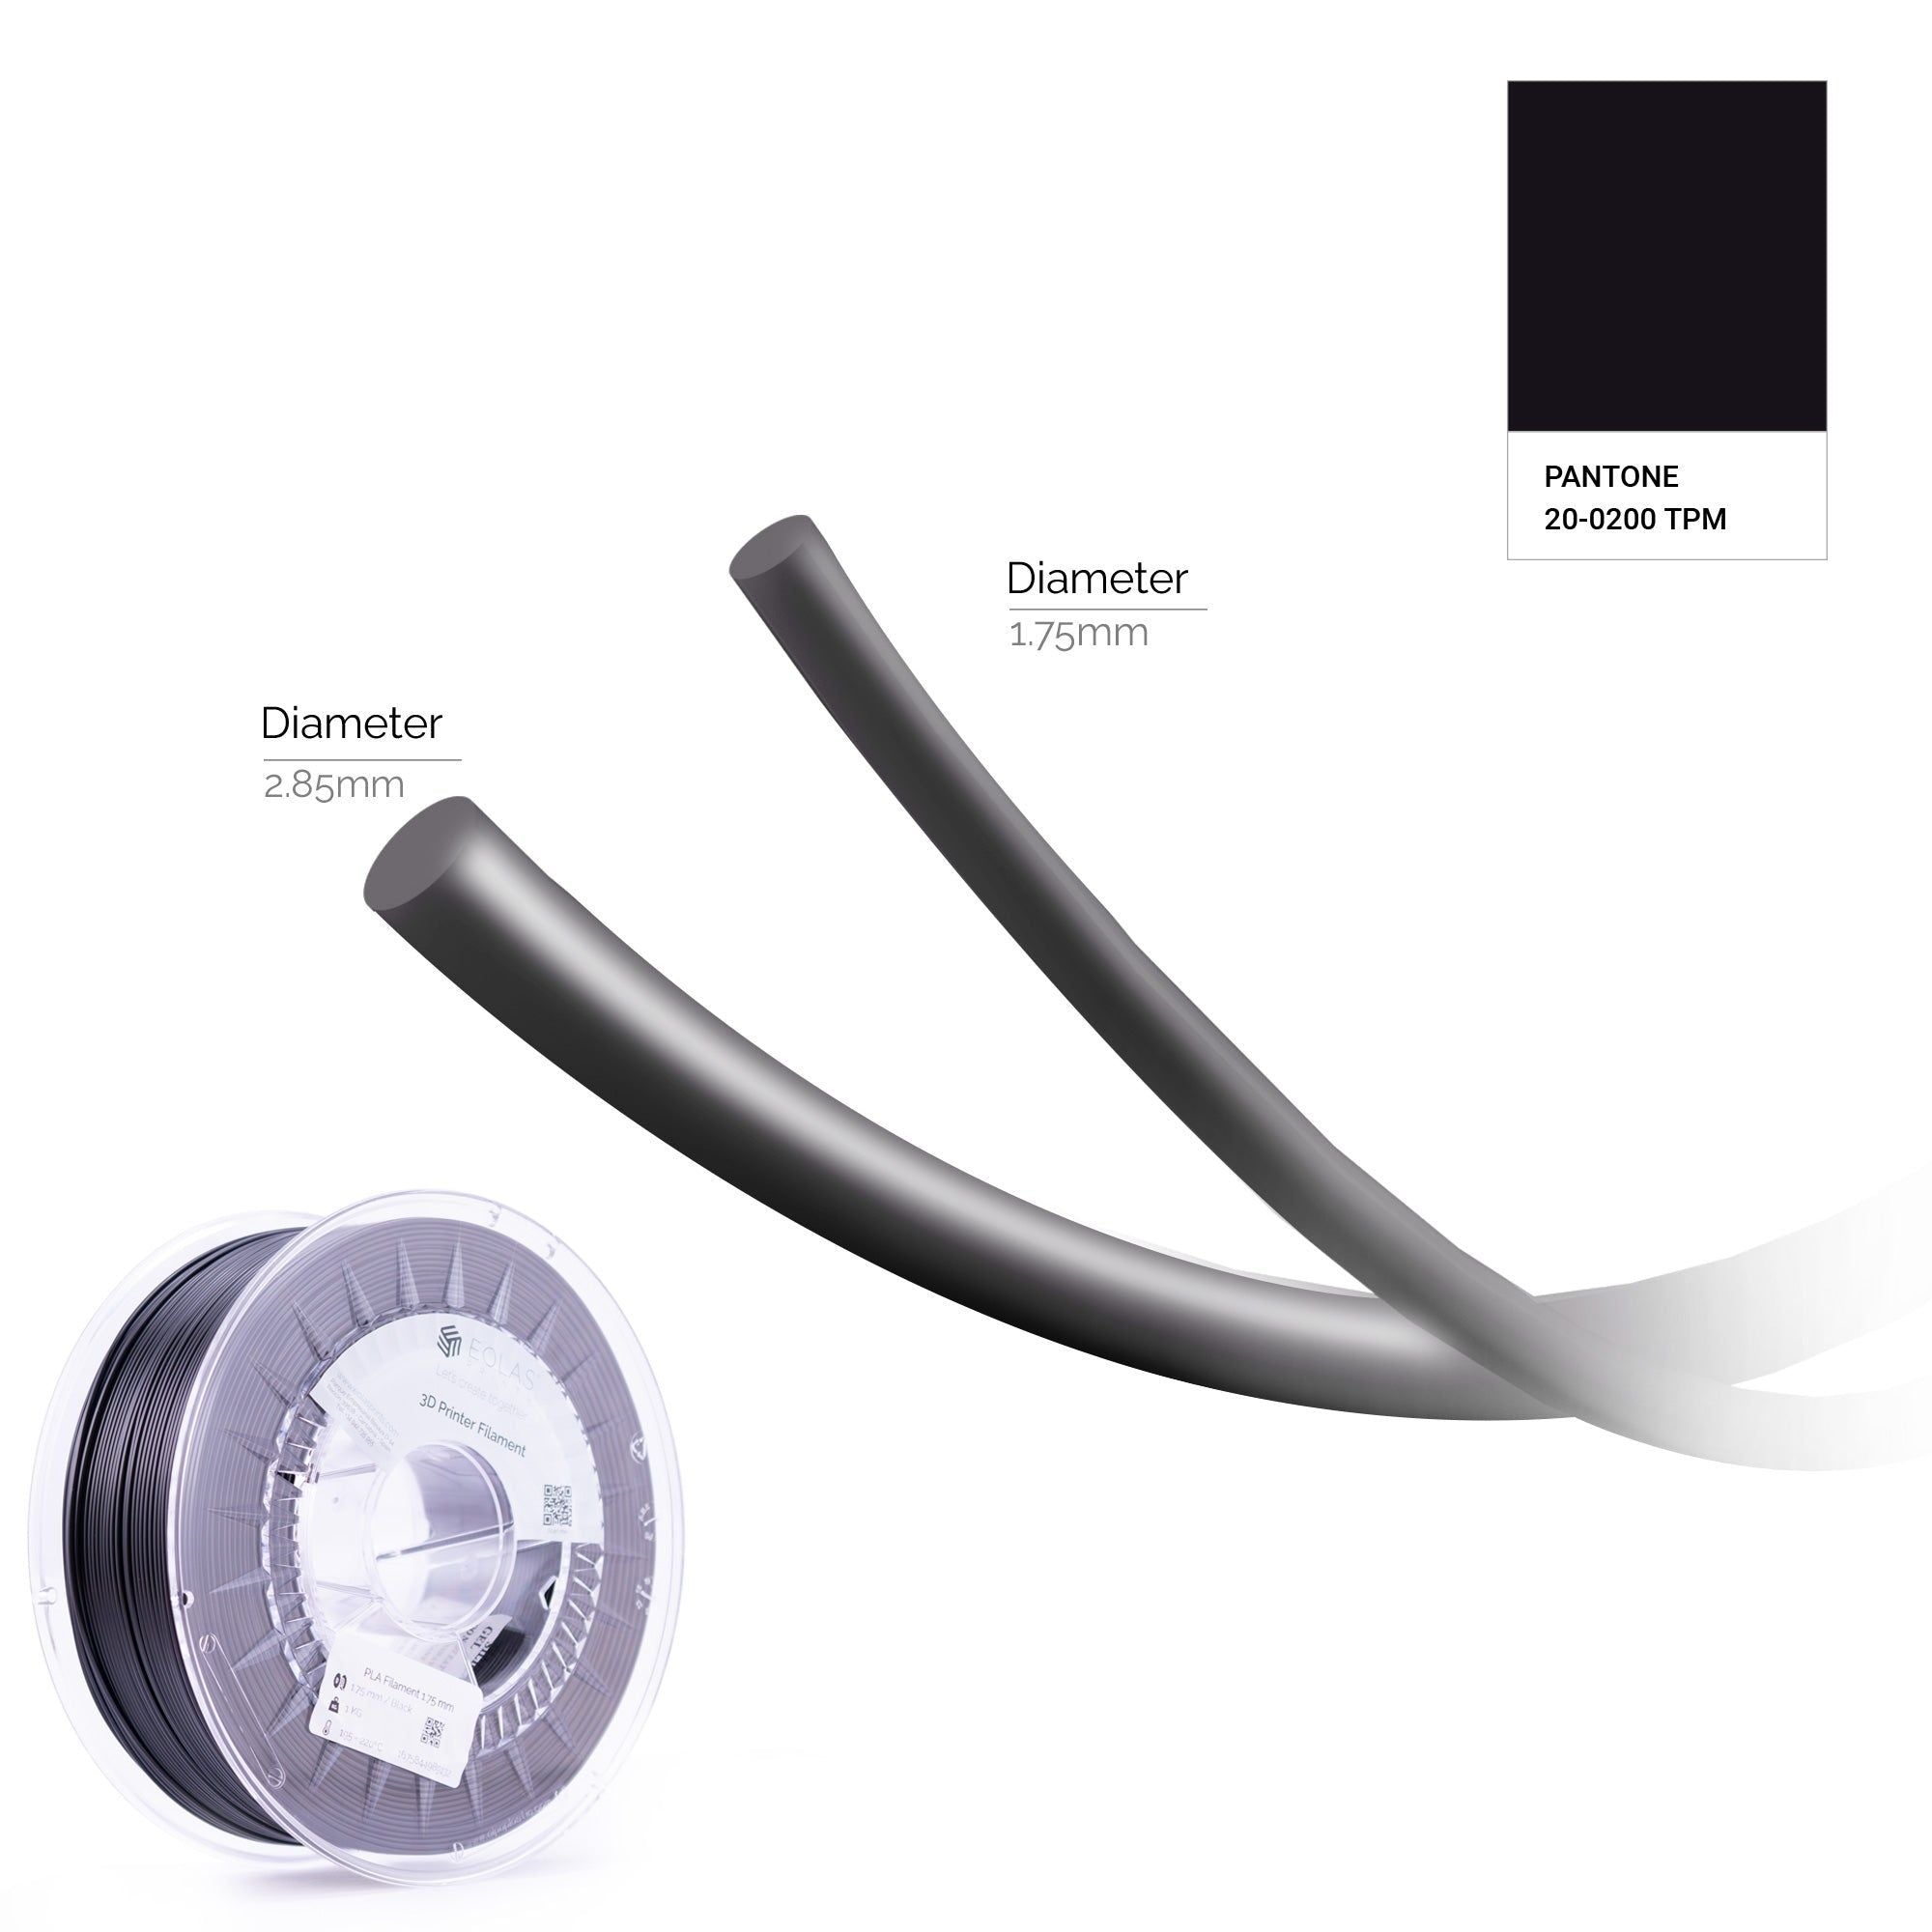 PETG Filament - Certified UV Resistant